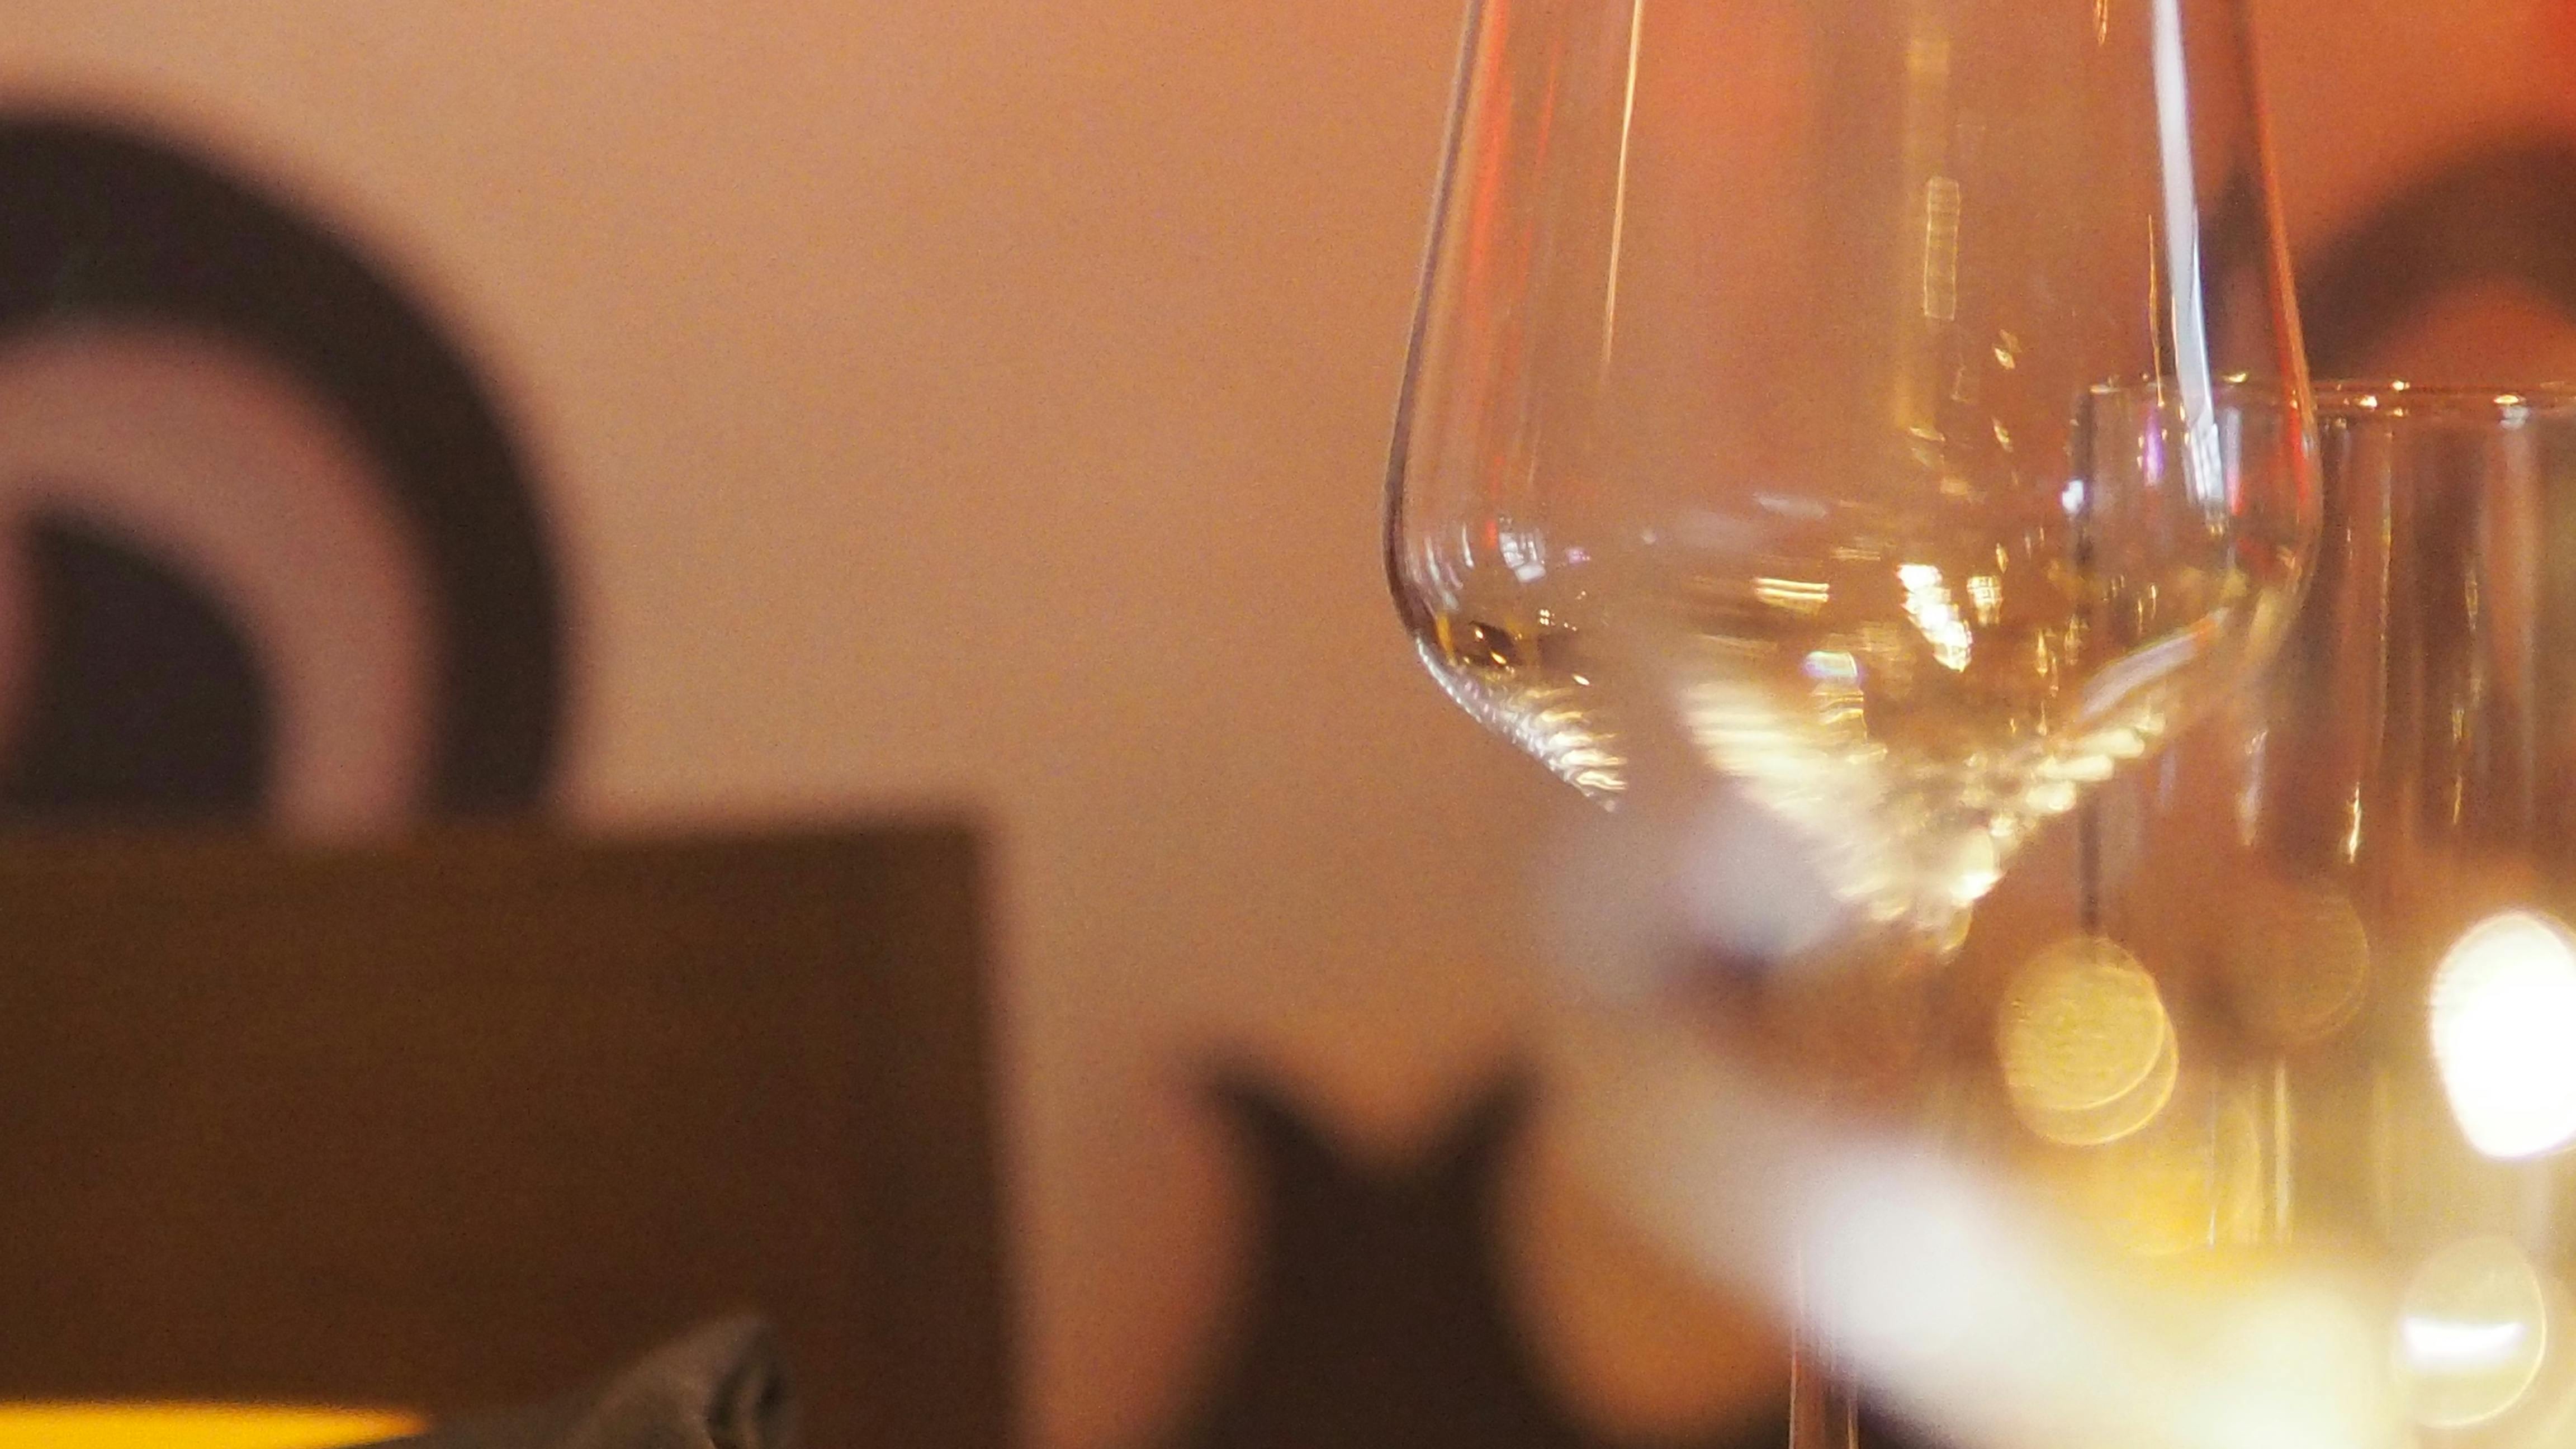 Free stock photo of drinking glass, glass, wine glass